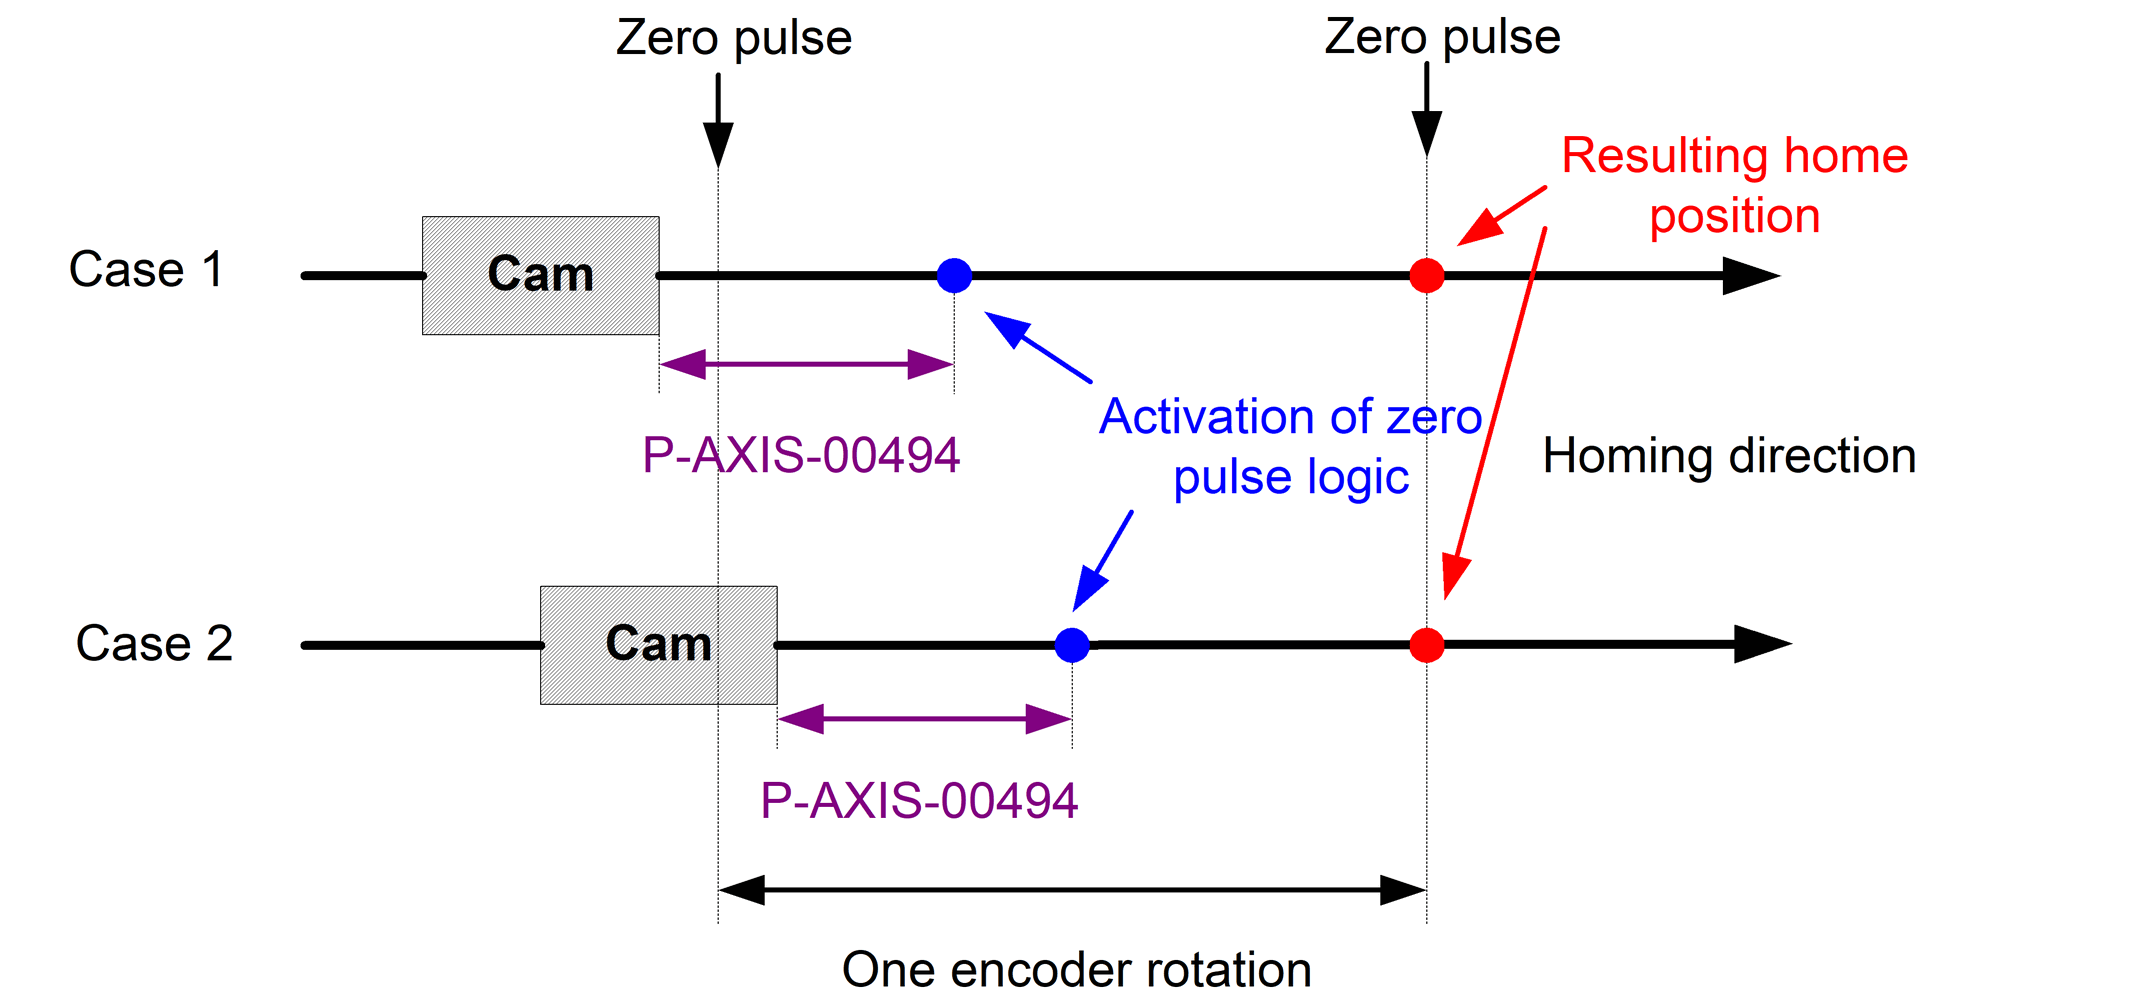 Delayed activation of zero pulse logic 2: